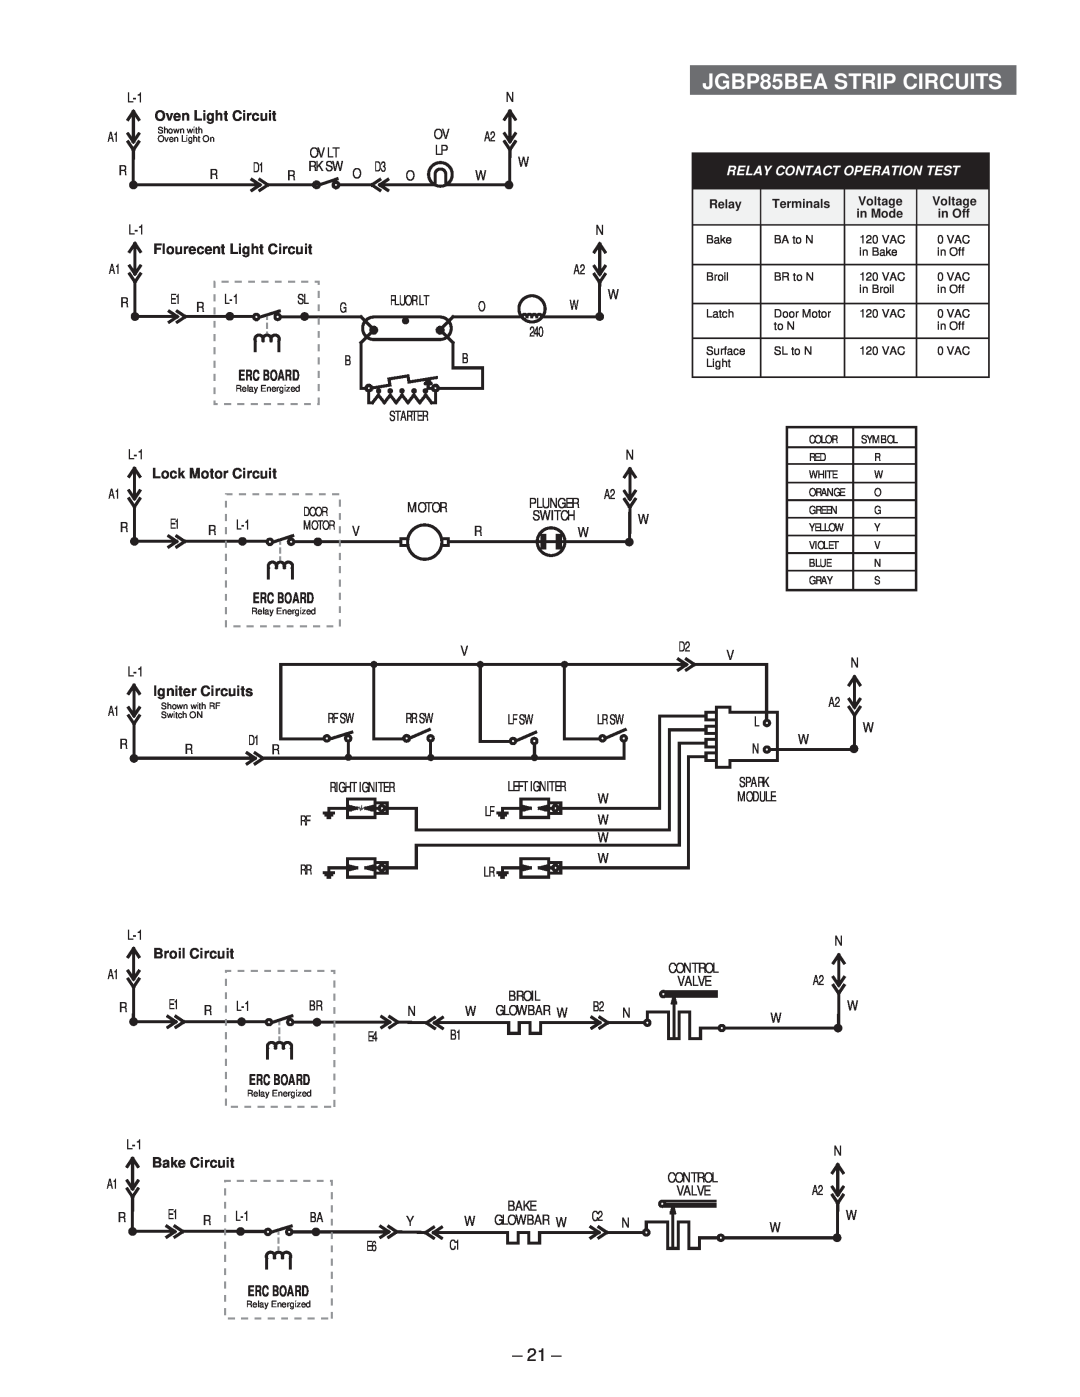 GE JGBP90 A Oven Light Circuit, Flourecent Light Circuit, Lock Motor Circuit, Erc Board, Igniter Circuits, Bake Circuit 